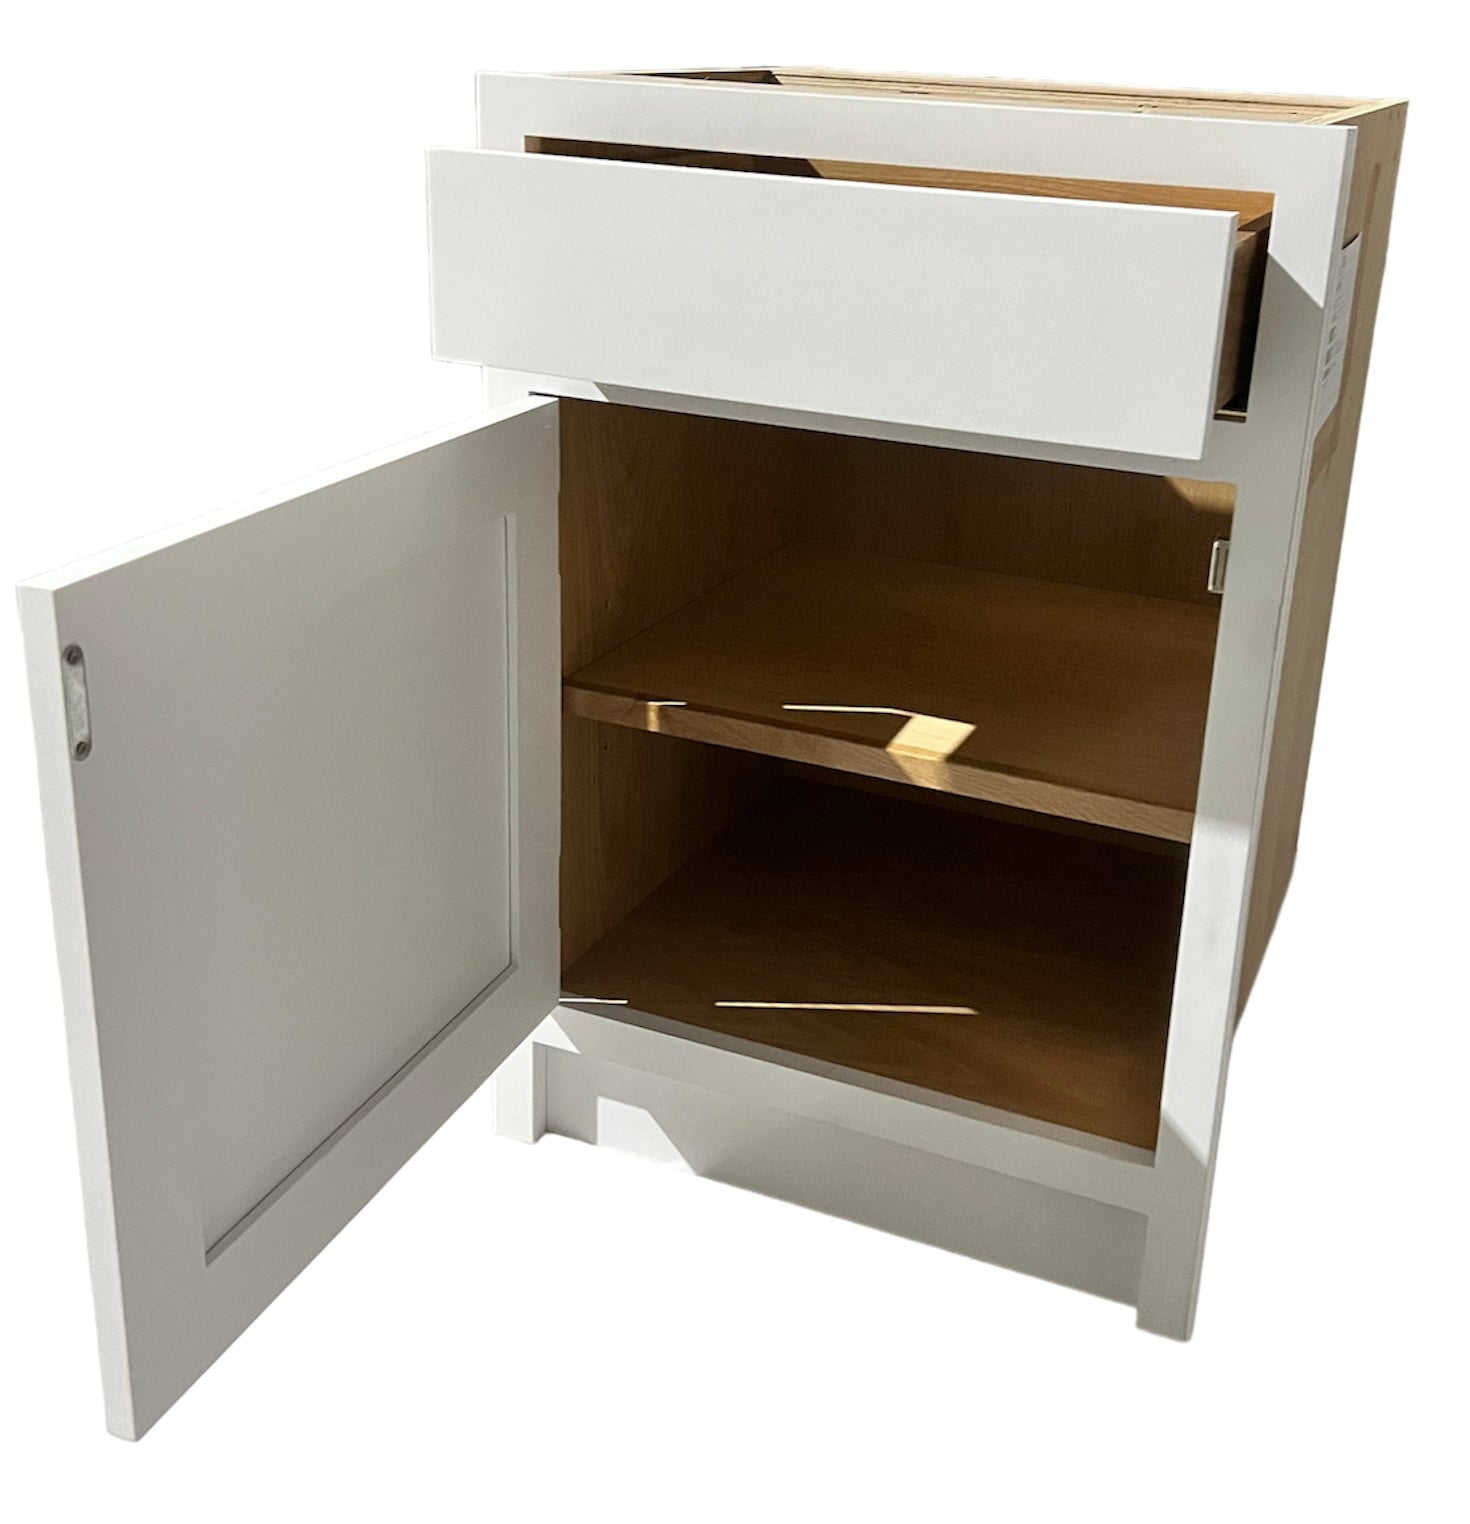 BDL 600 - 600mm Wide Drawerline single drawer, single door base - Classic Kitchens Direct